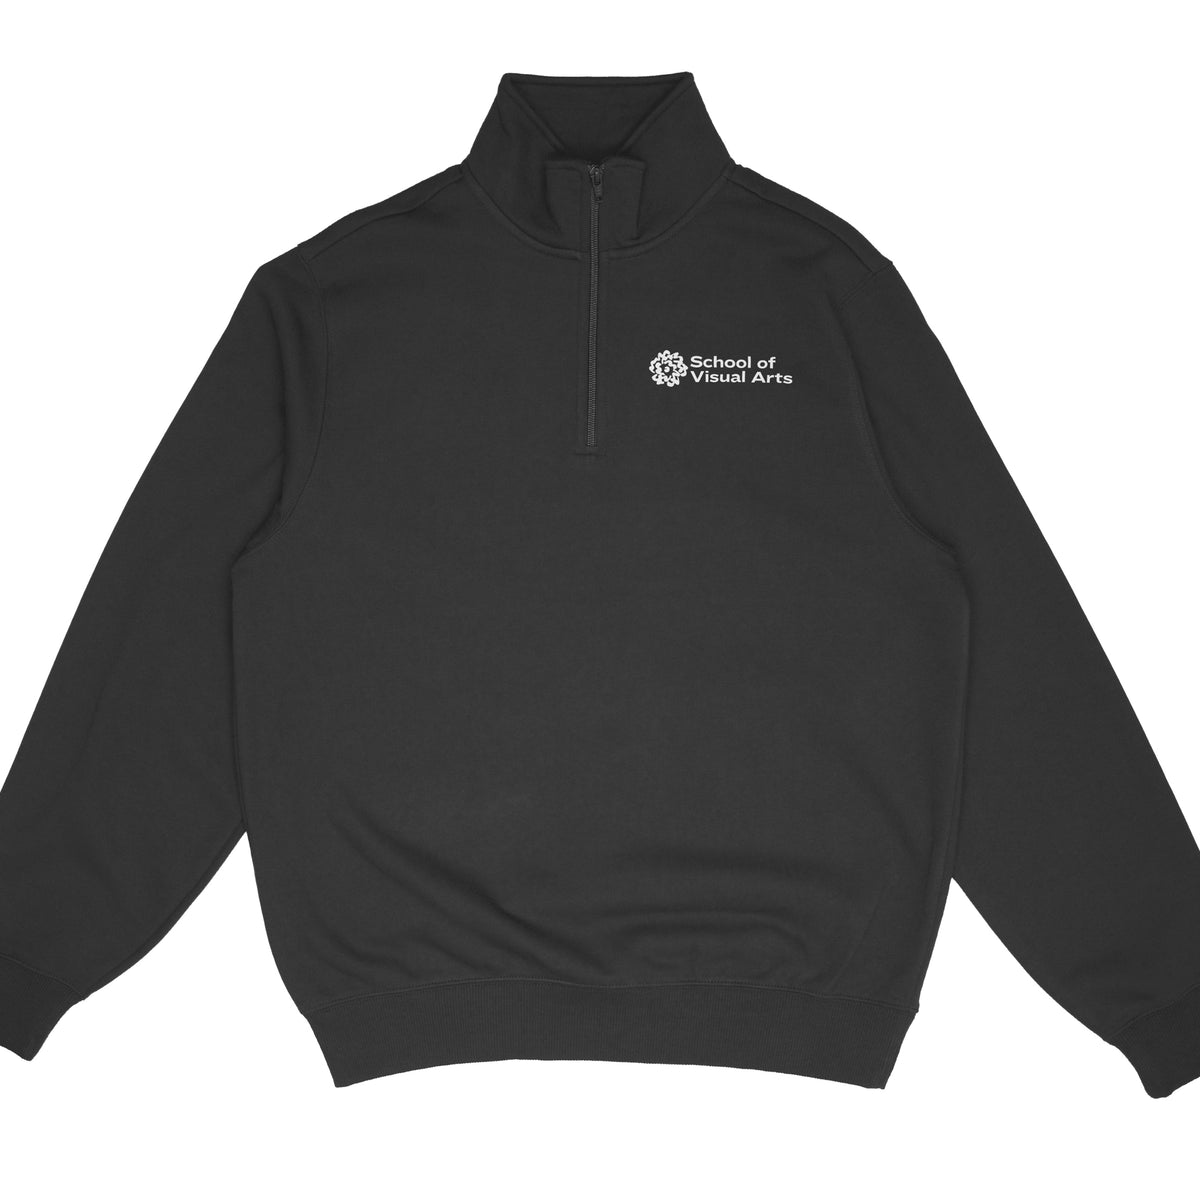 1/4 Zip Sweatshirt With Crest - Ridley College's Campus Store